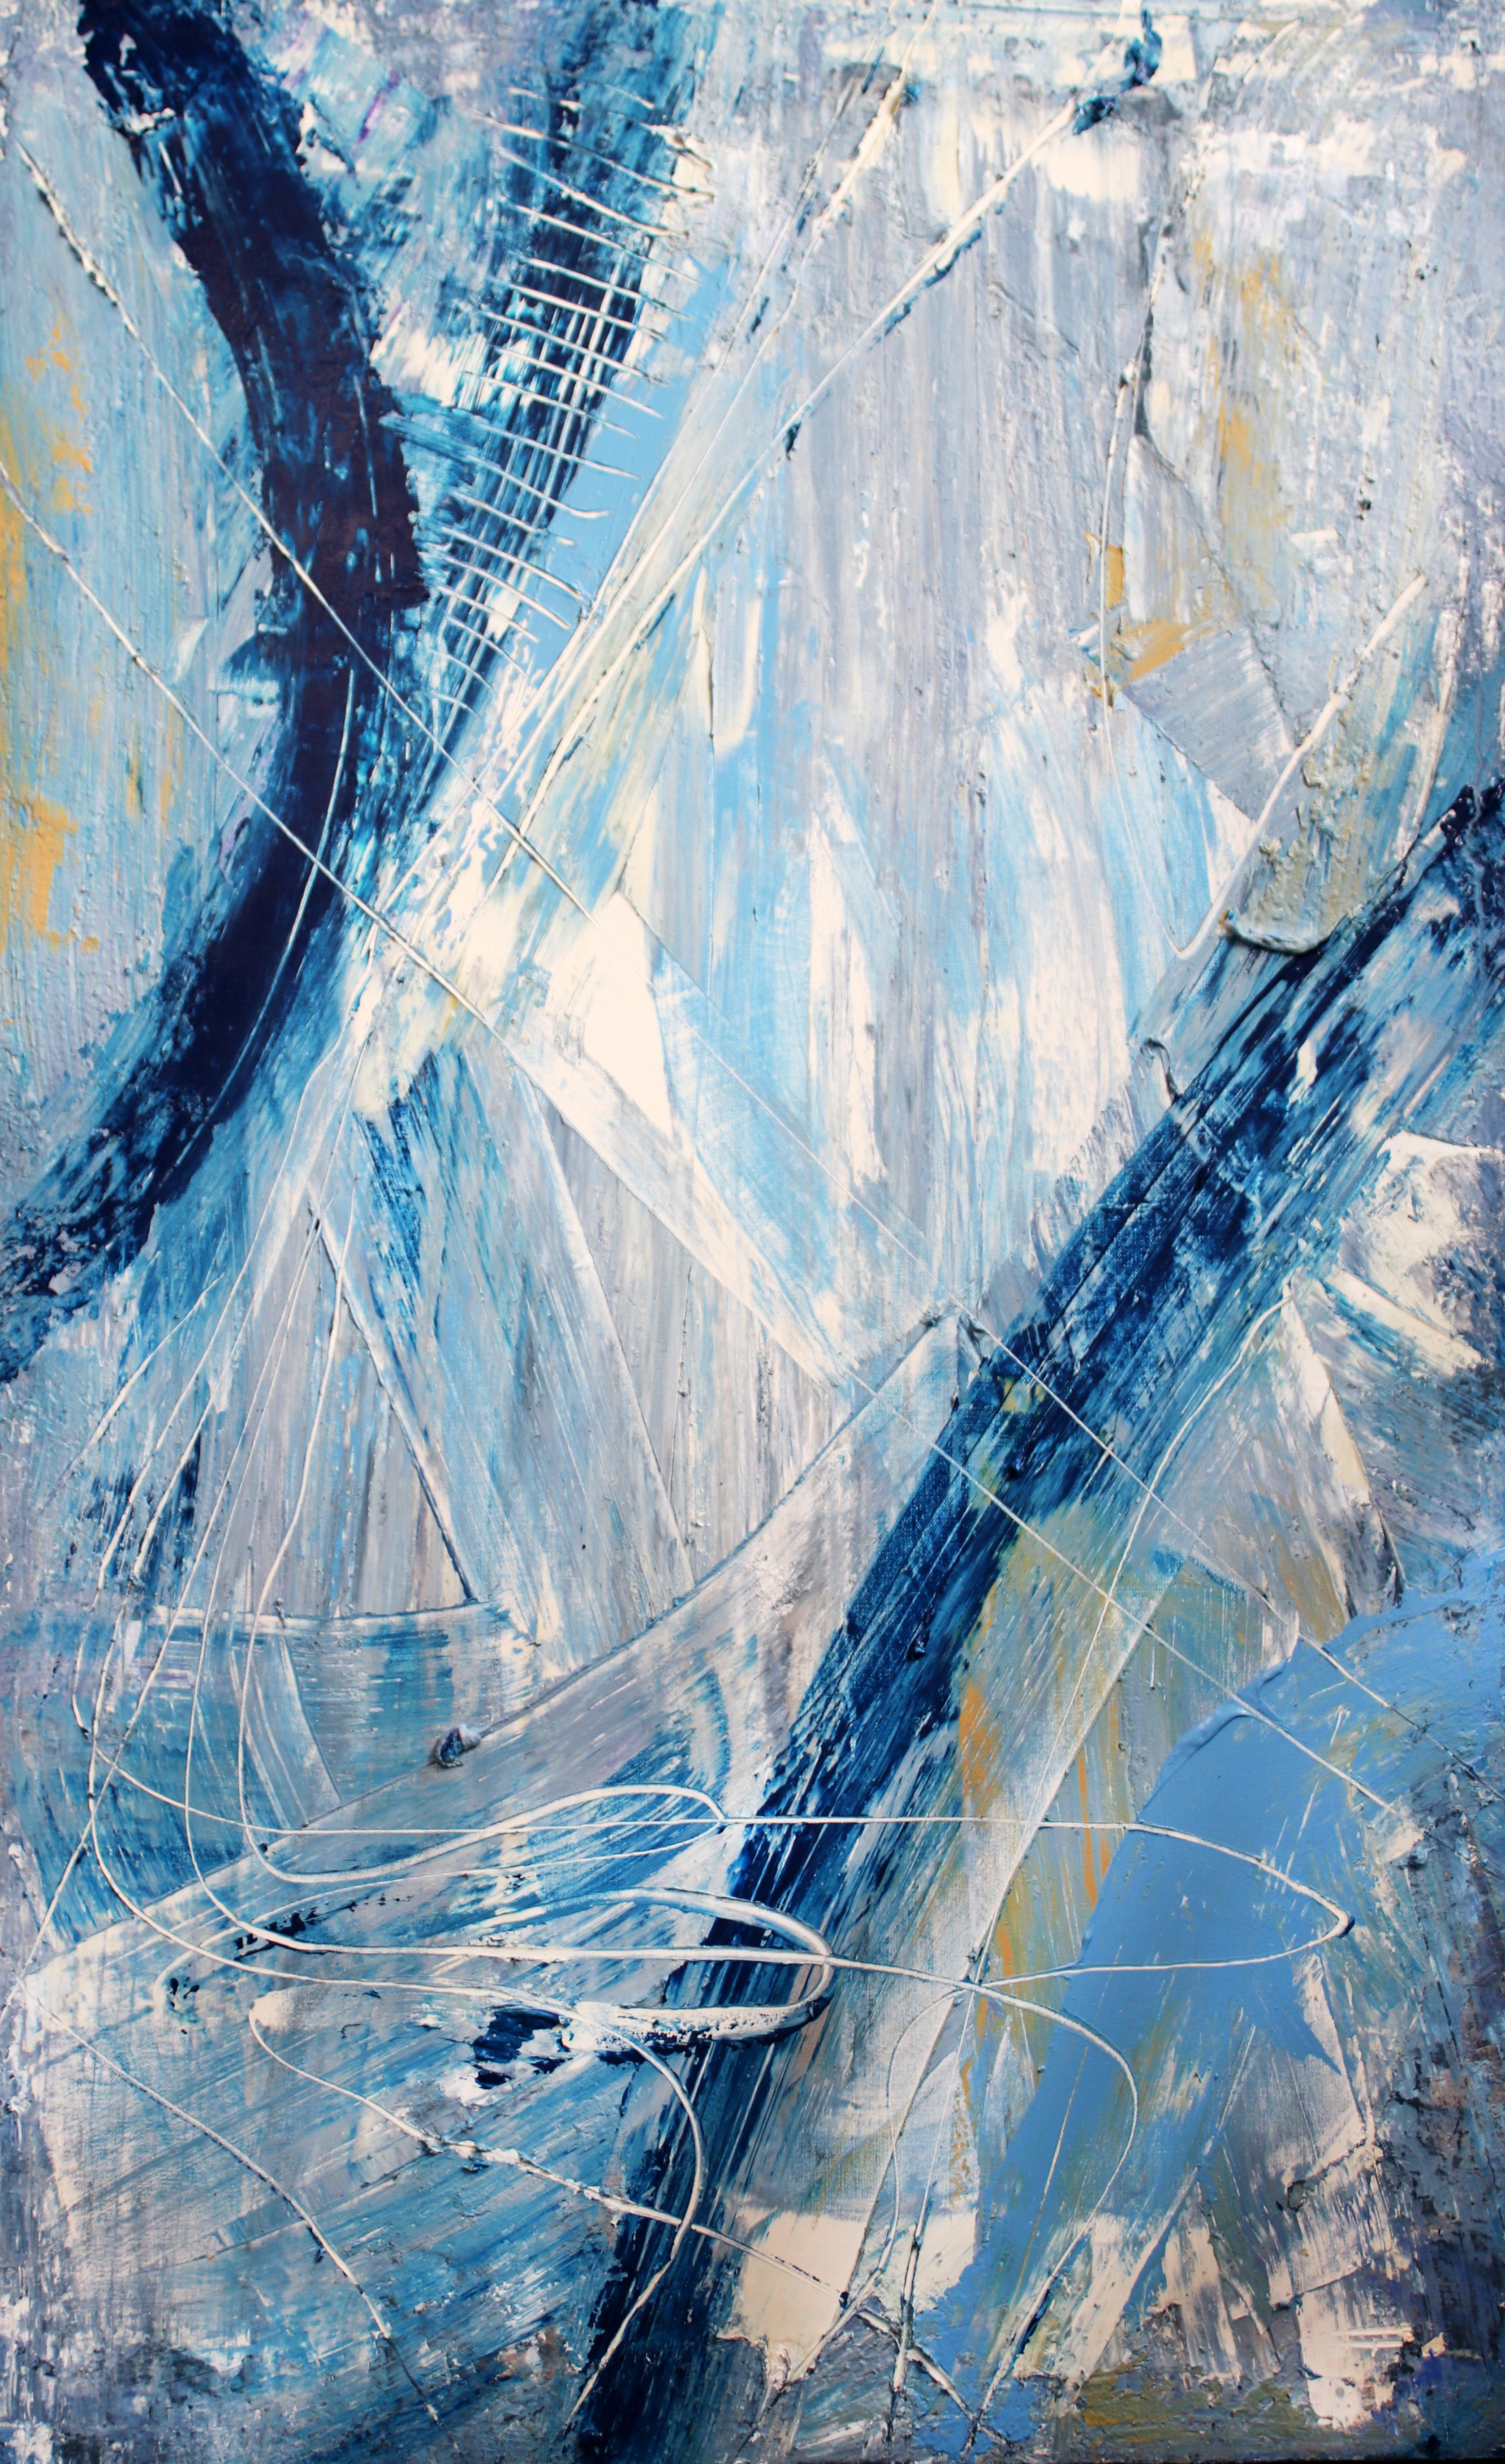 Blau Abstrakt Heavy Textured Mixed Medium auf Leinwand, Urban Raw 30 x 48